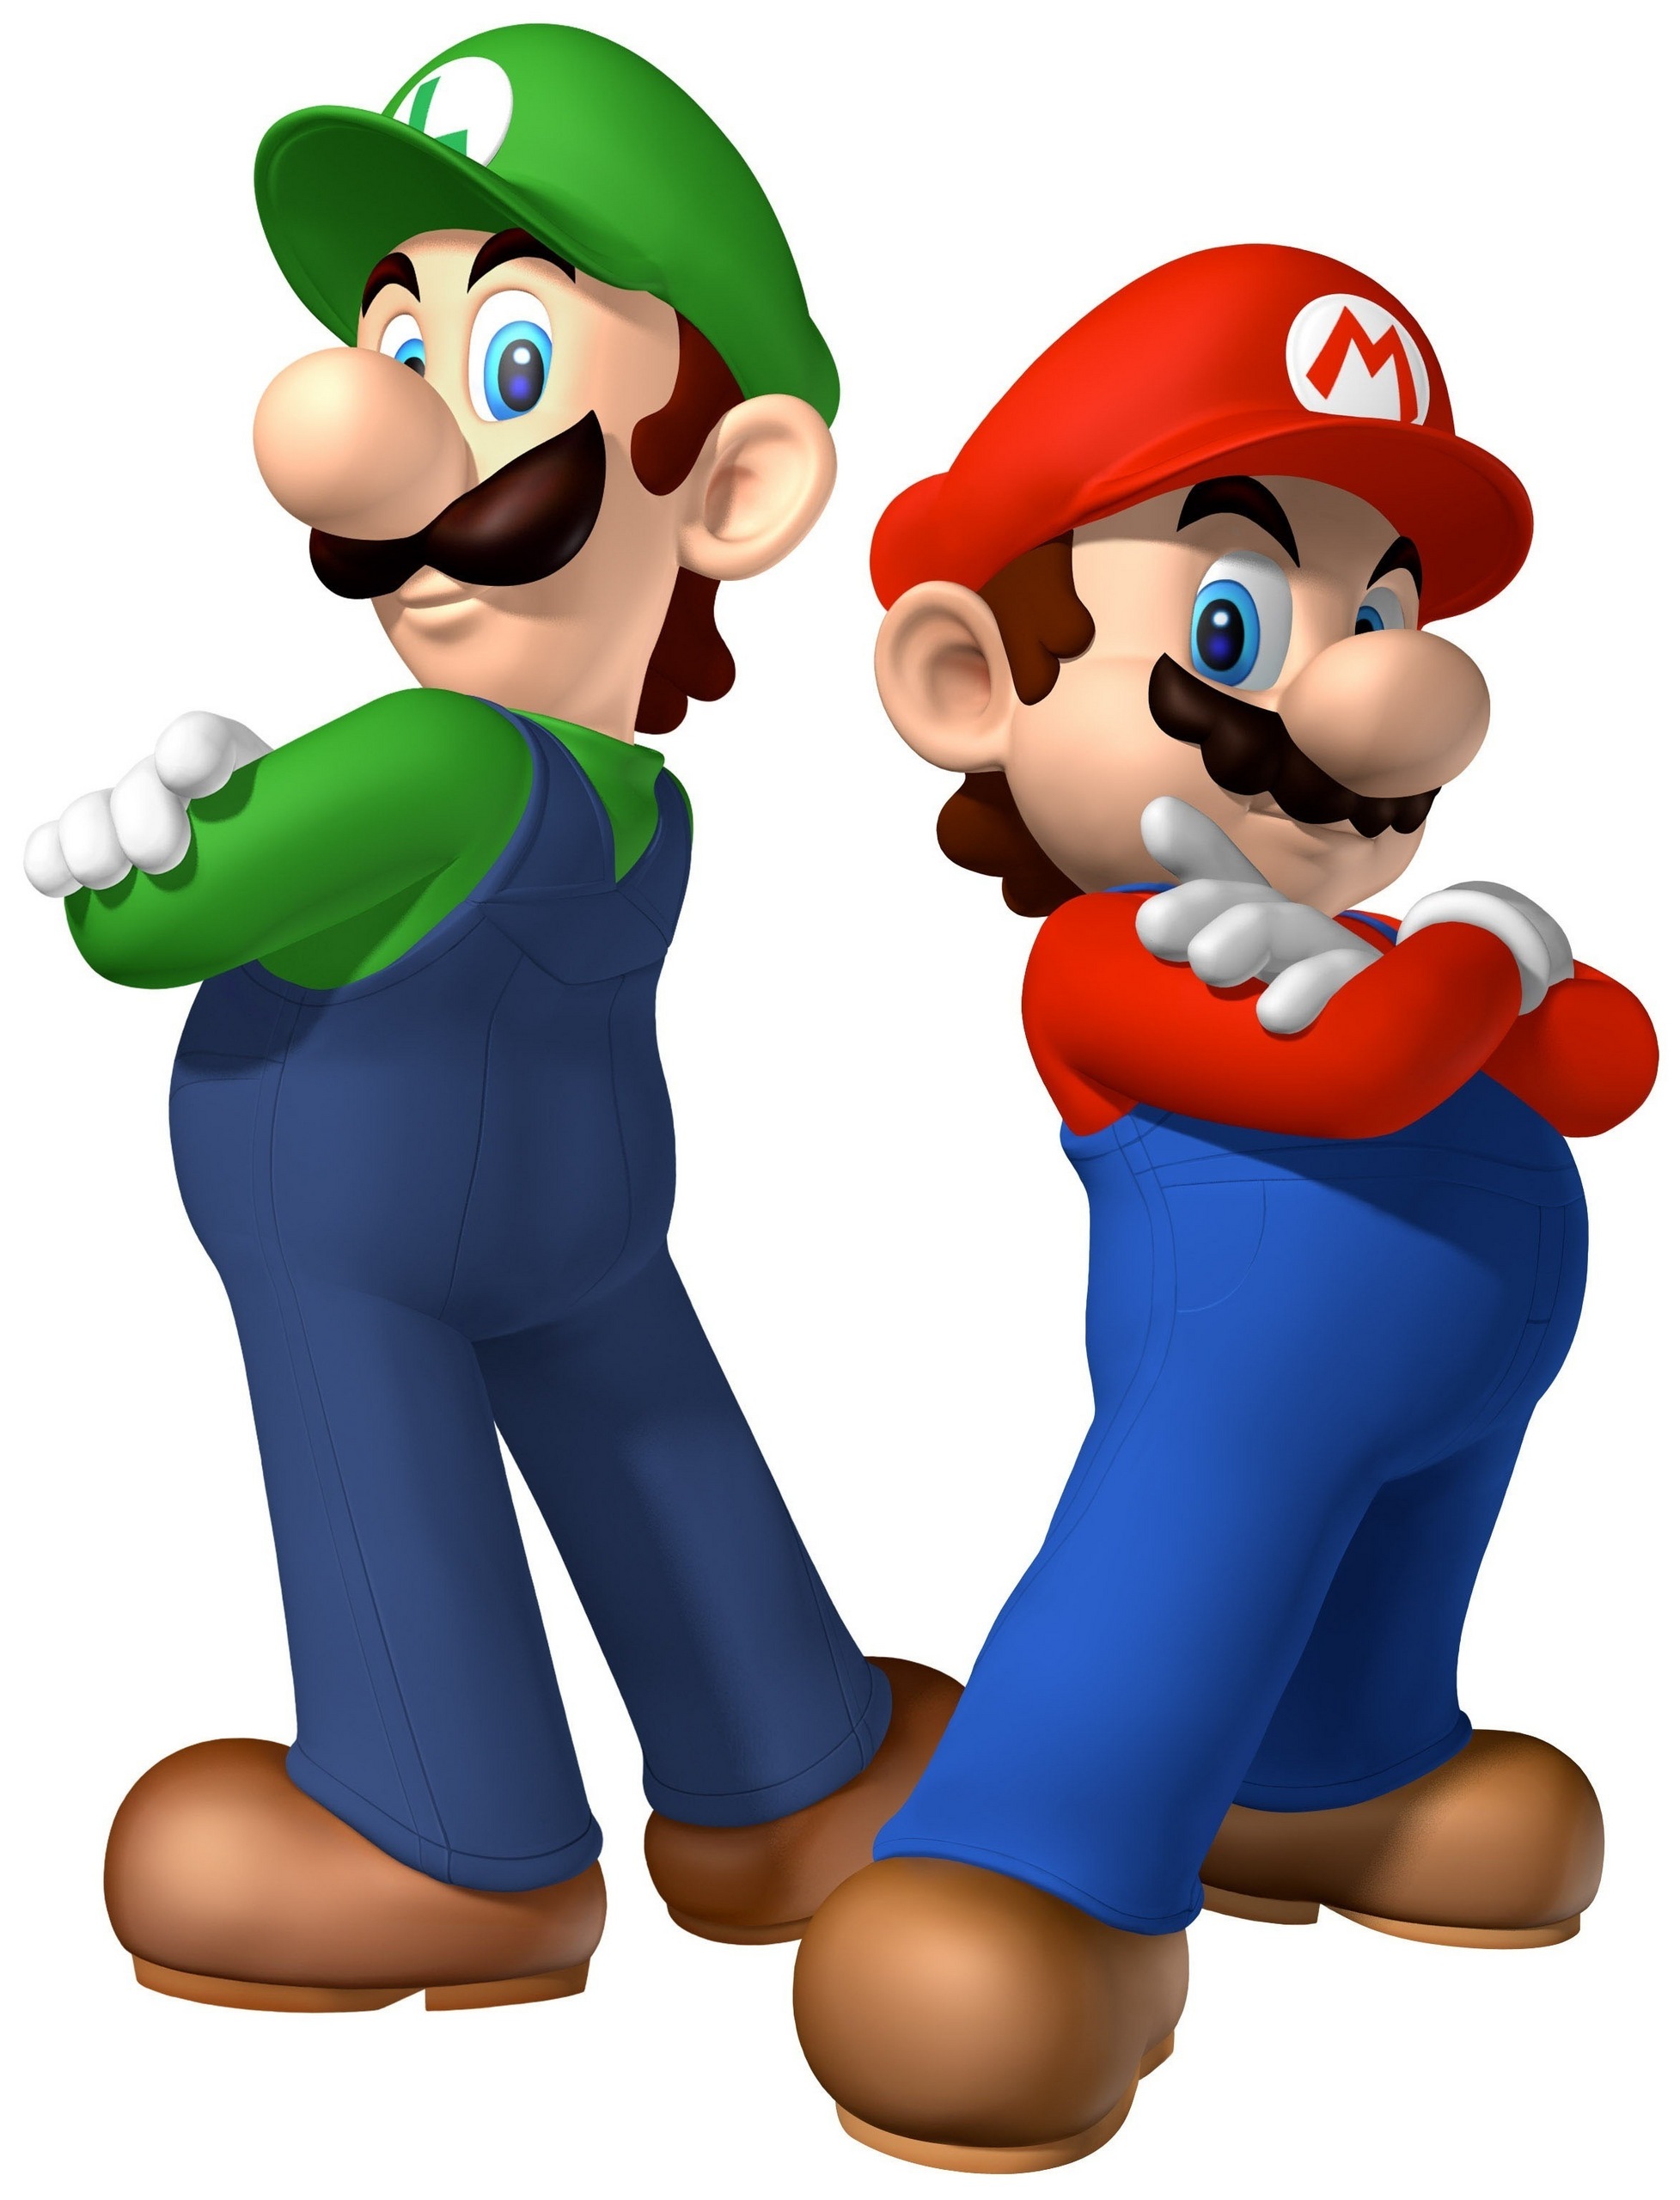 The-Mario-Bros-mario-and-luigi-9298164-1955-2560.jpg